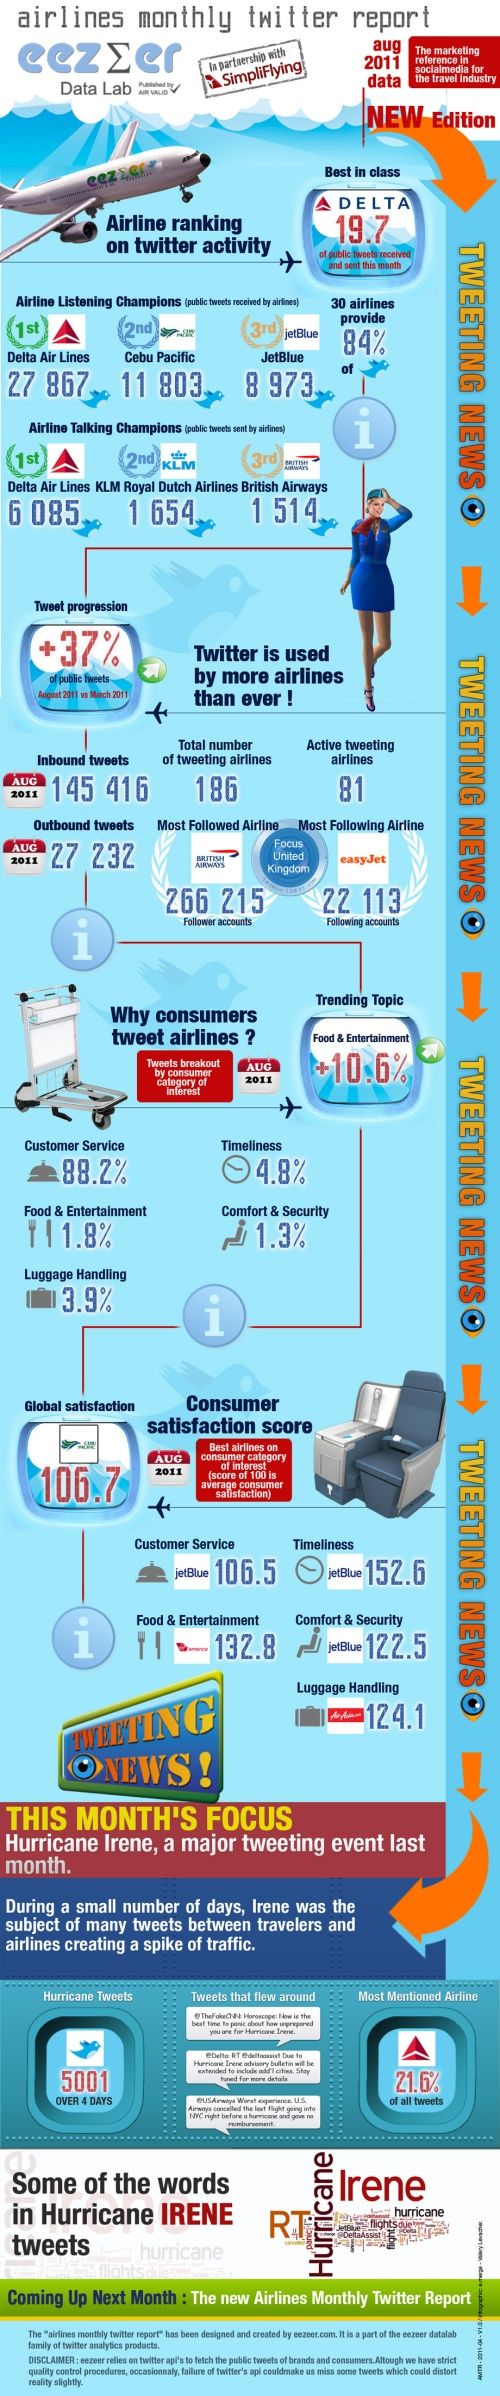 airlines-twitter-august-2011.jpg